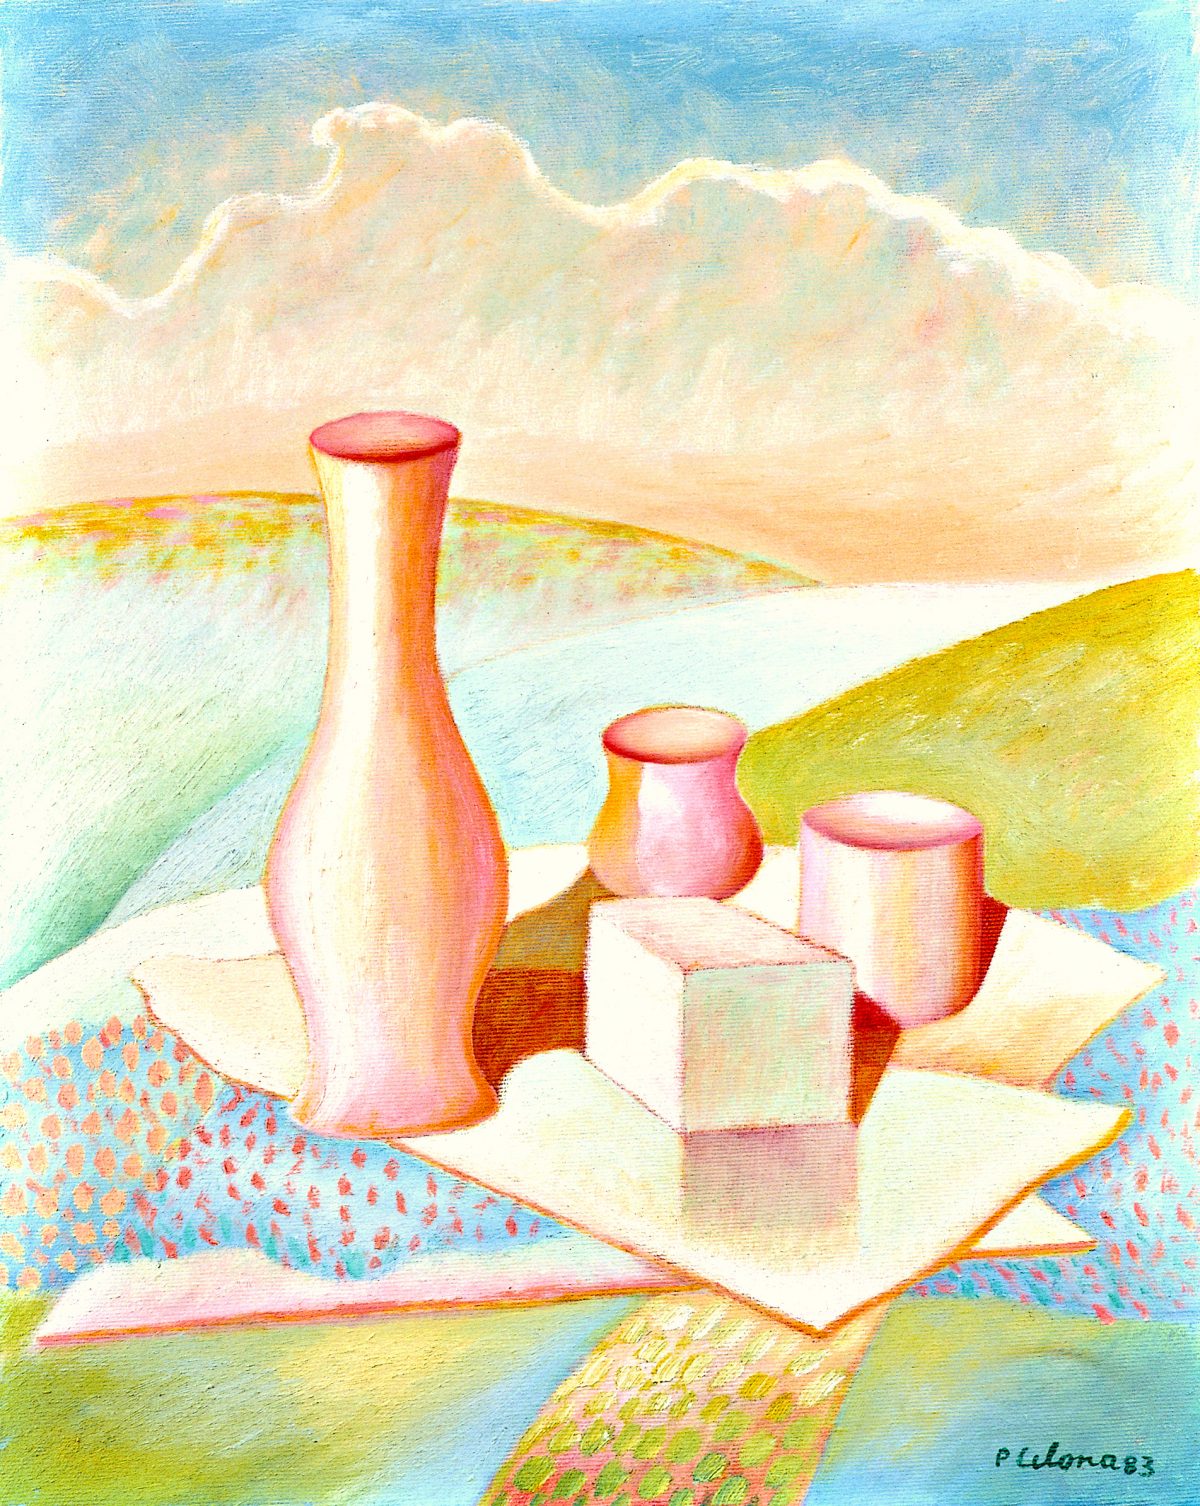 Vasi, 1983
Olio su tela, 40 x 50 cm,
Collezione privata,
NMV003